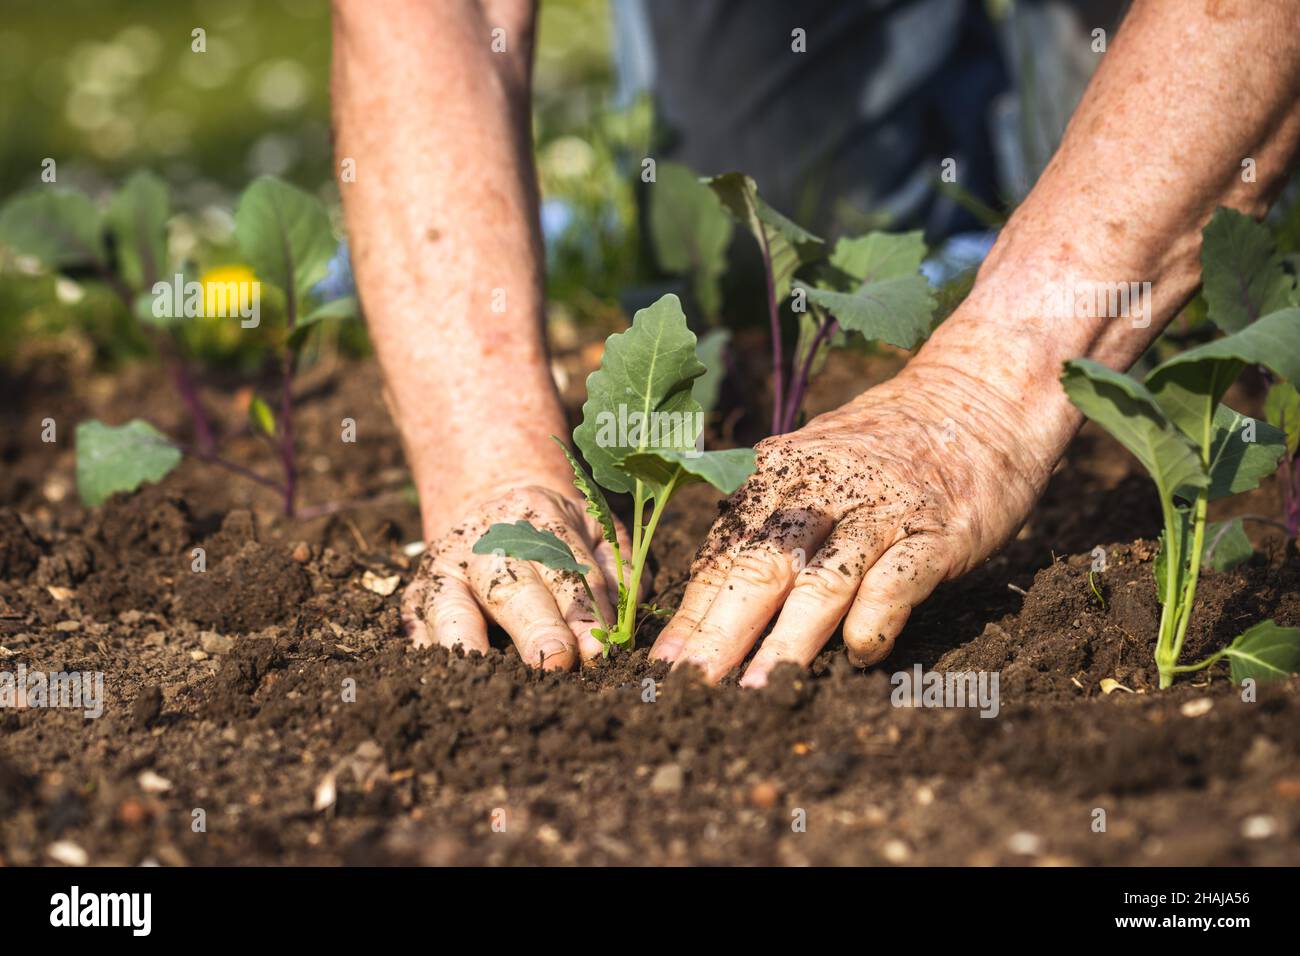 Planting kohlrabi seedling in organic garden. Gardening at spring. Farmer hands working in vegetable bed Stock Photo